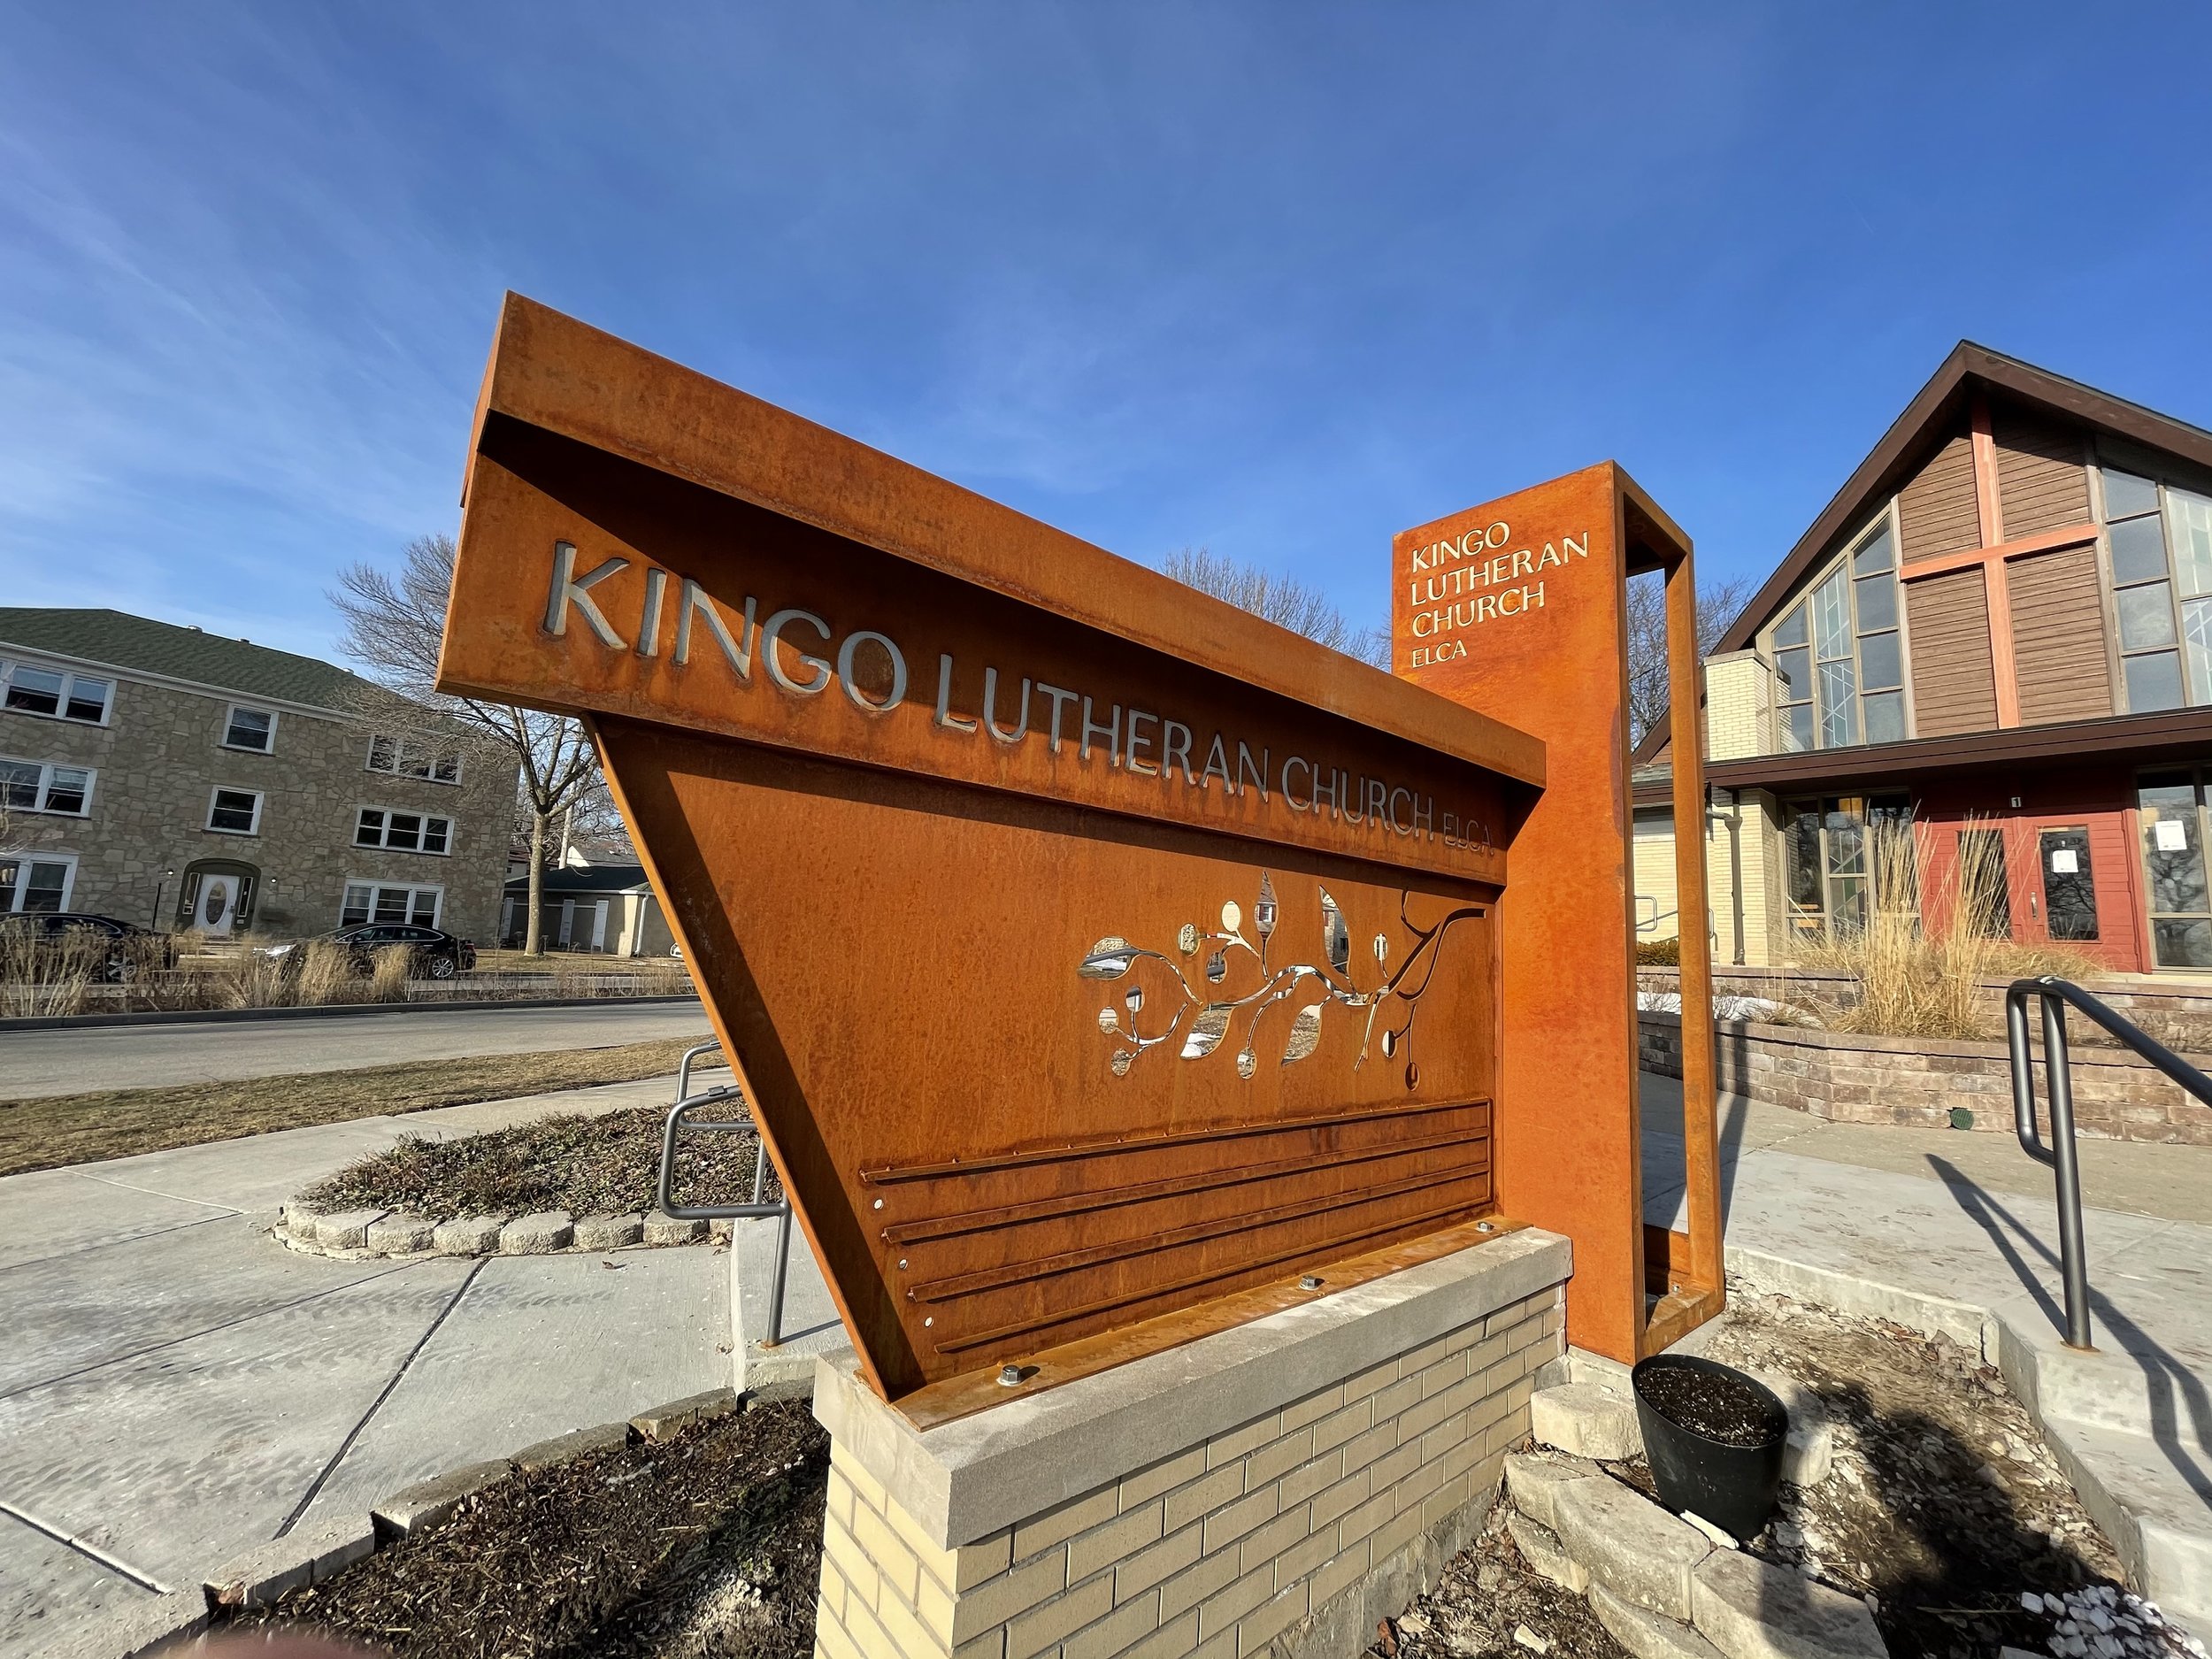 Kingo Lutheran Church | Exterior Signage | Shorewood, WI